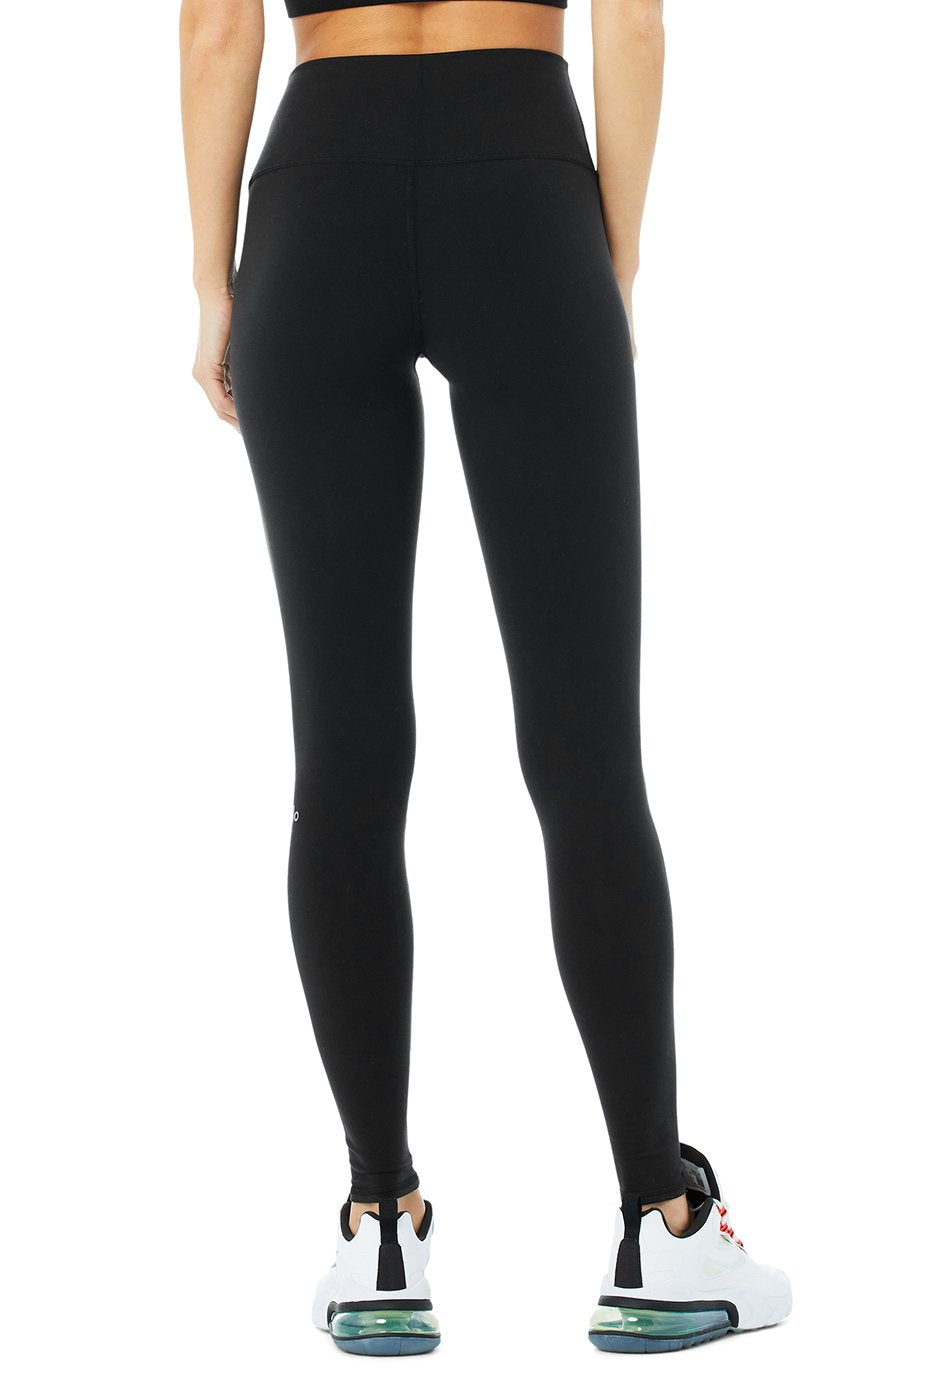 Alo Yoga W5473R High-Waist Airbrush Legging in Black